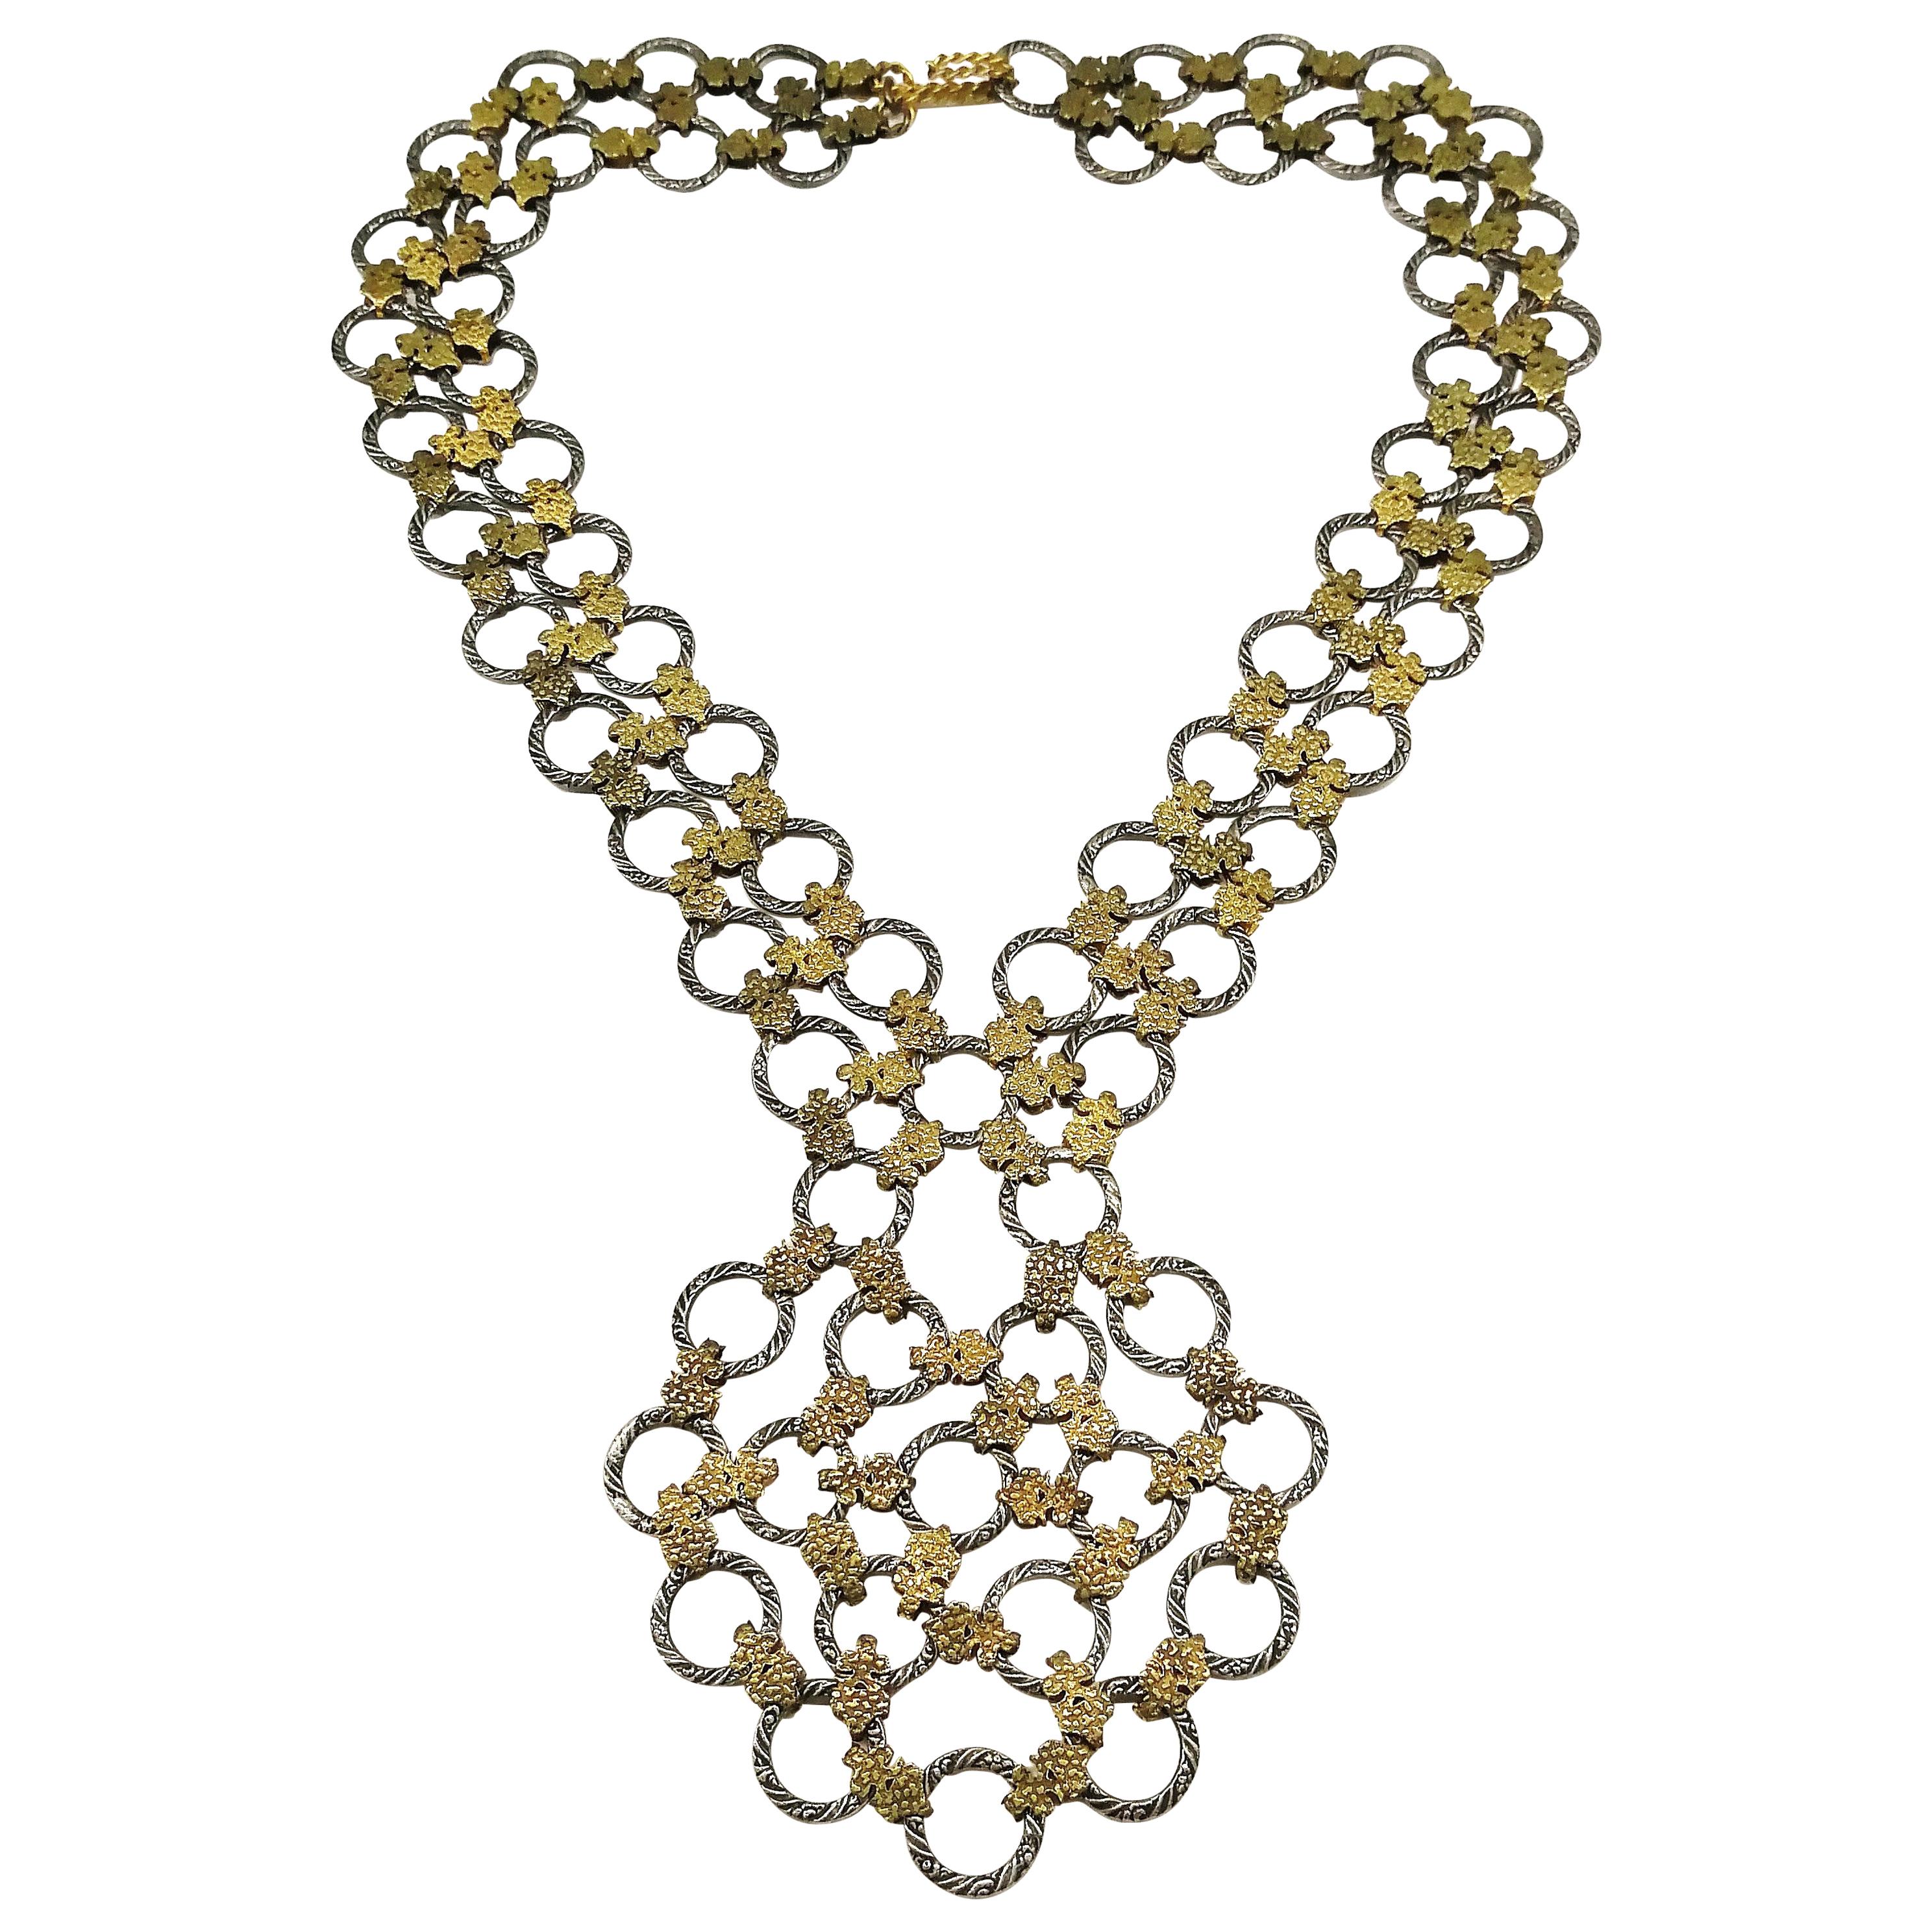  A gilt and silvered metal 'sautoir' necklace, Francoise Montague, France, 1960s